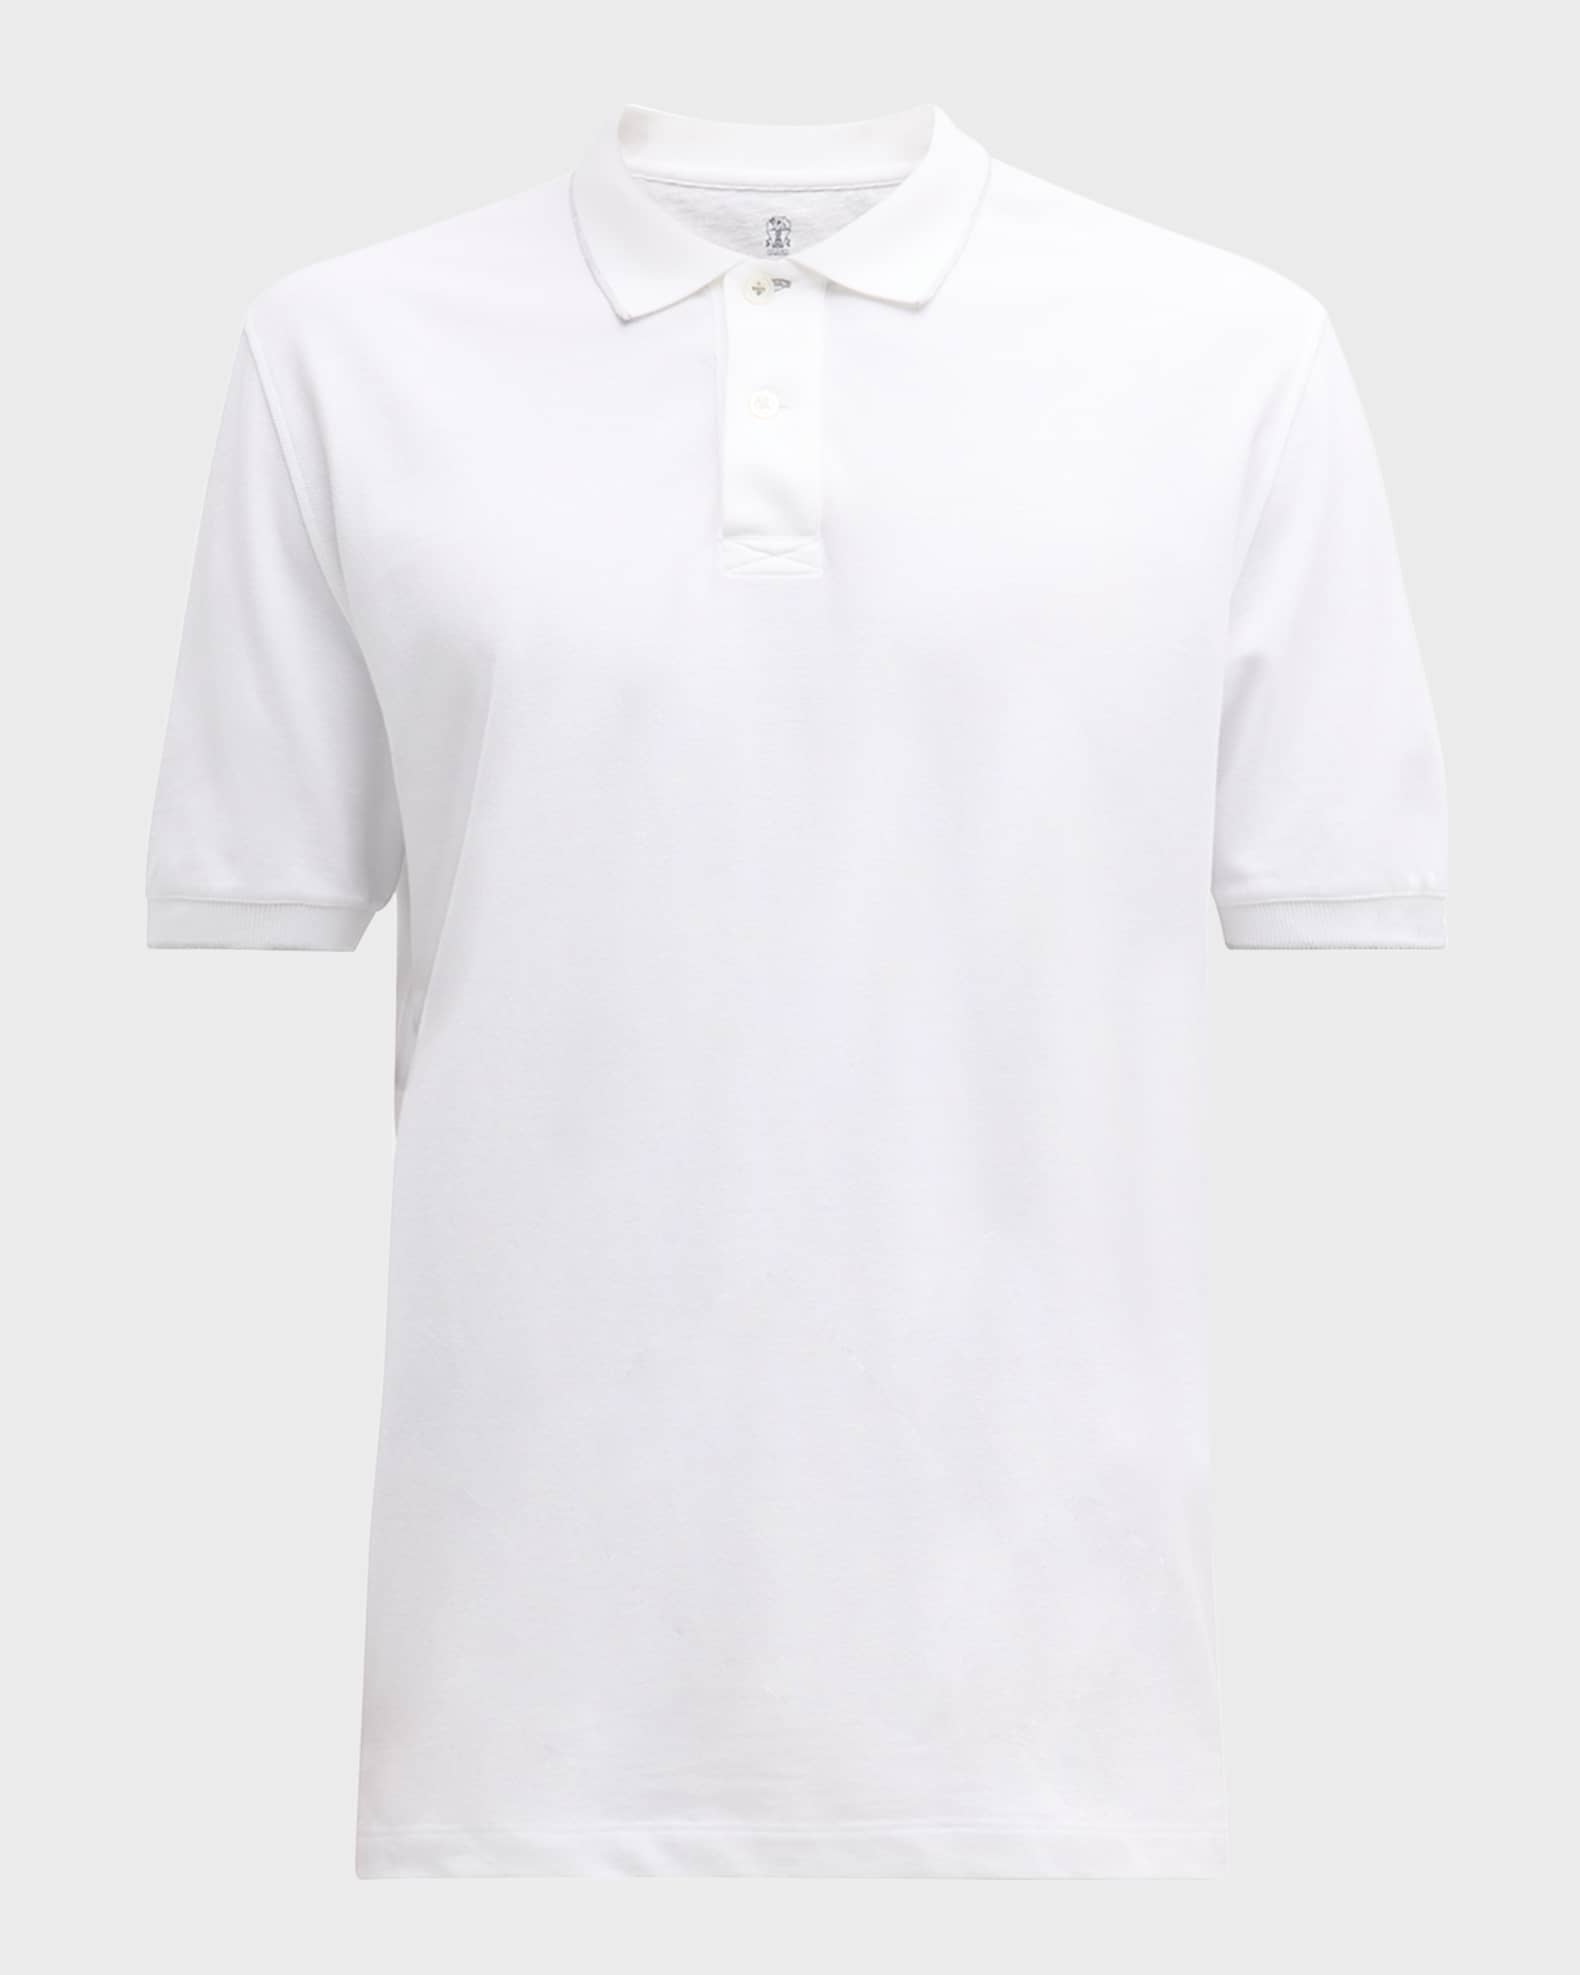 Brunello Cucinelli Men's Solid Pique Polo Shirt | Neiman Marcus